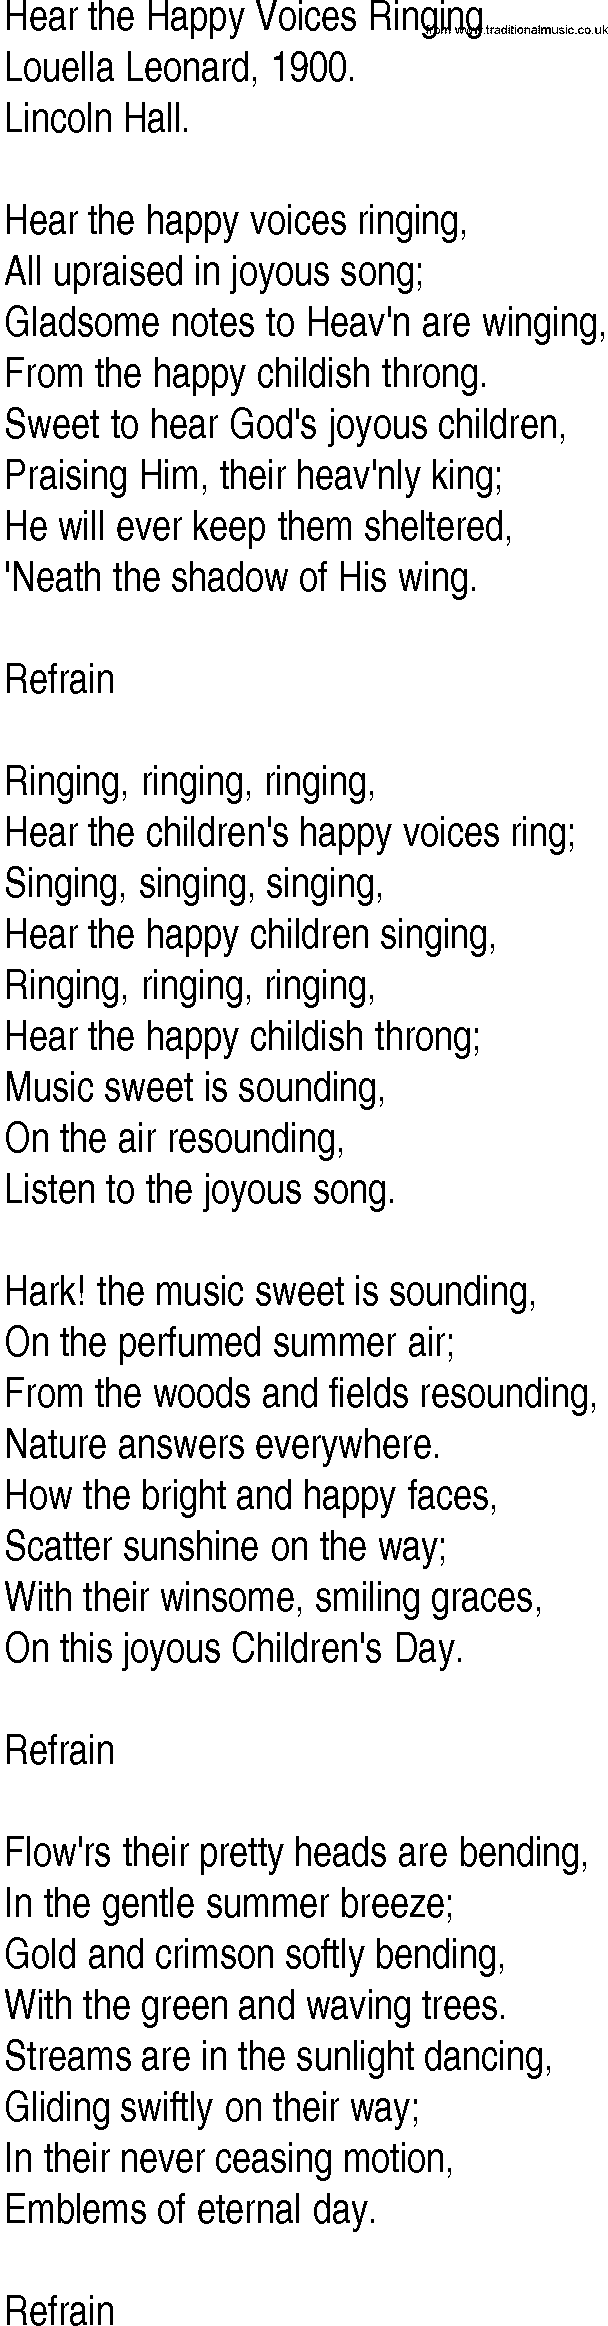 Hymn and Gospel Song: Hear the Happy Voices Ringing by Louella Leonard lyrics